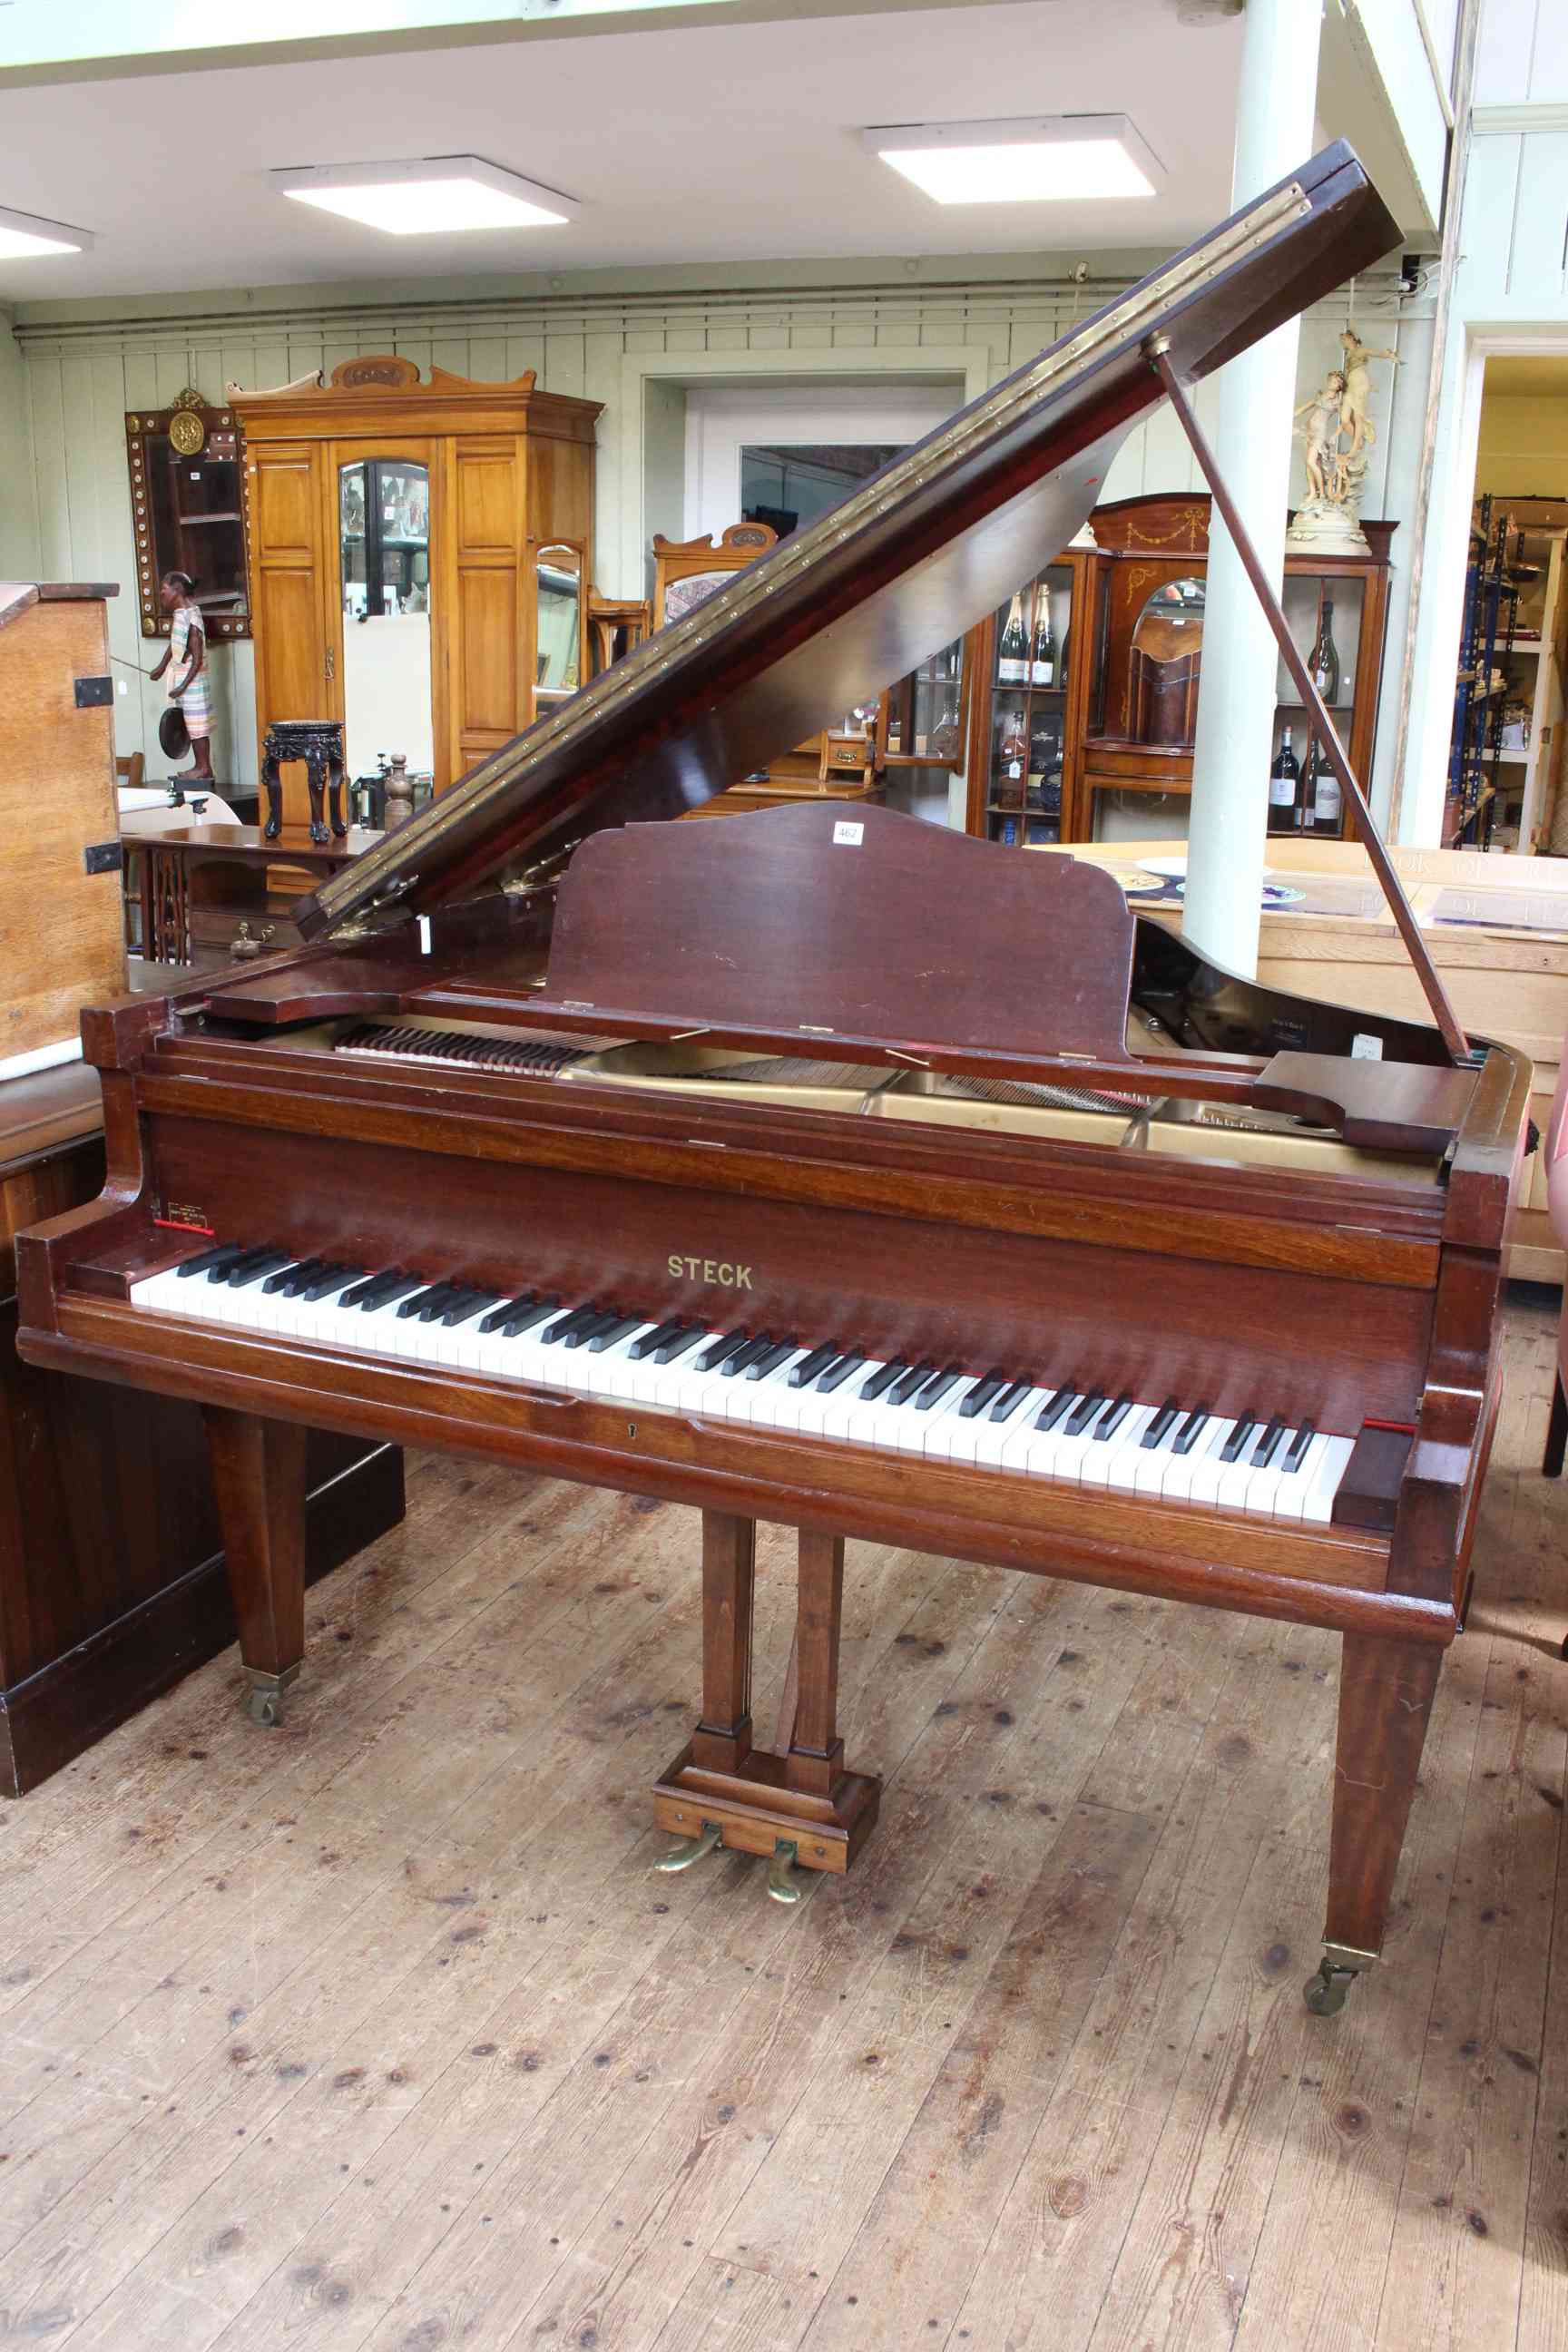 Steck mahogany cased baby grand piano, possible Serial No. 32583.